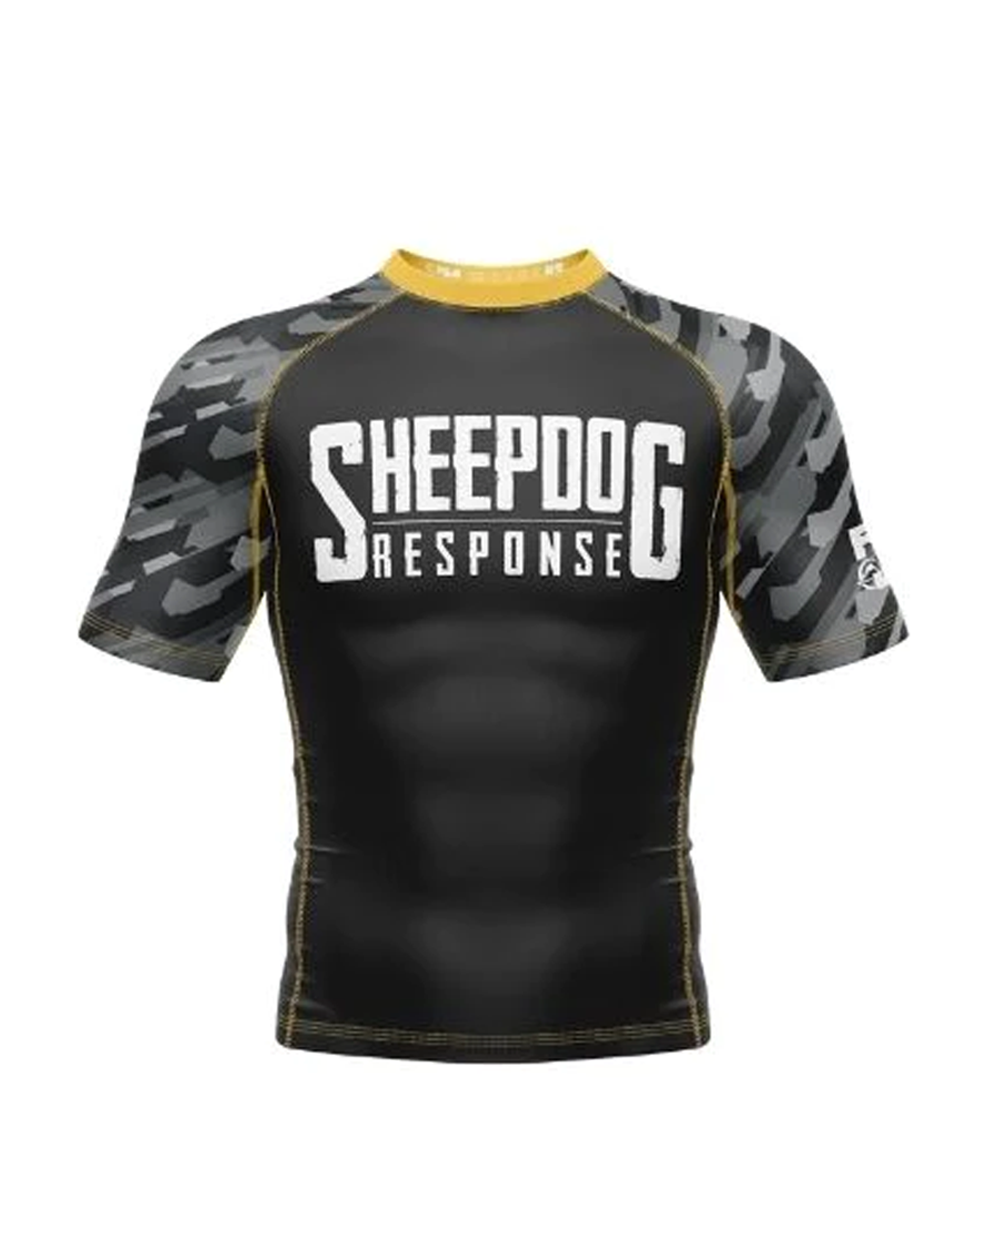 Products - Sheepdog Response